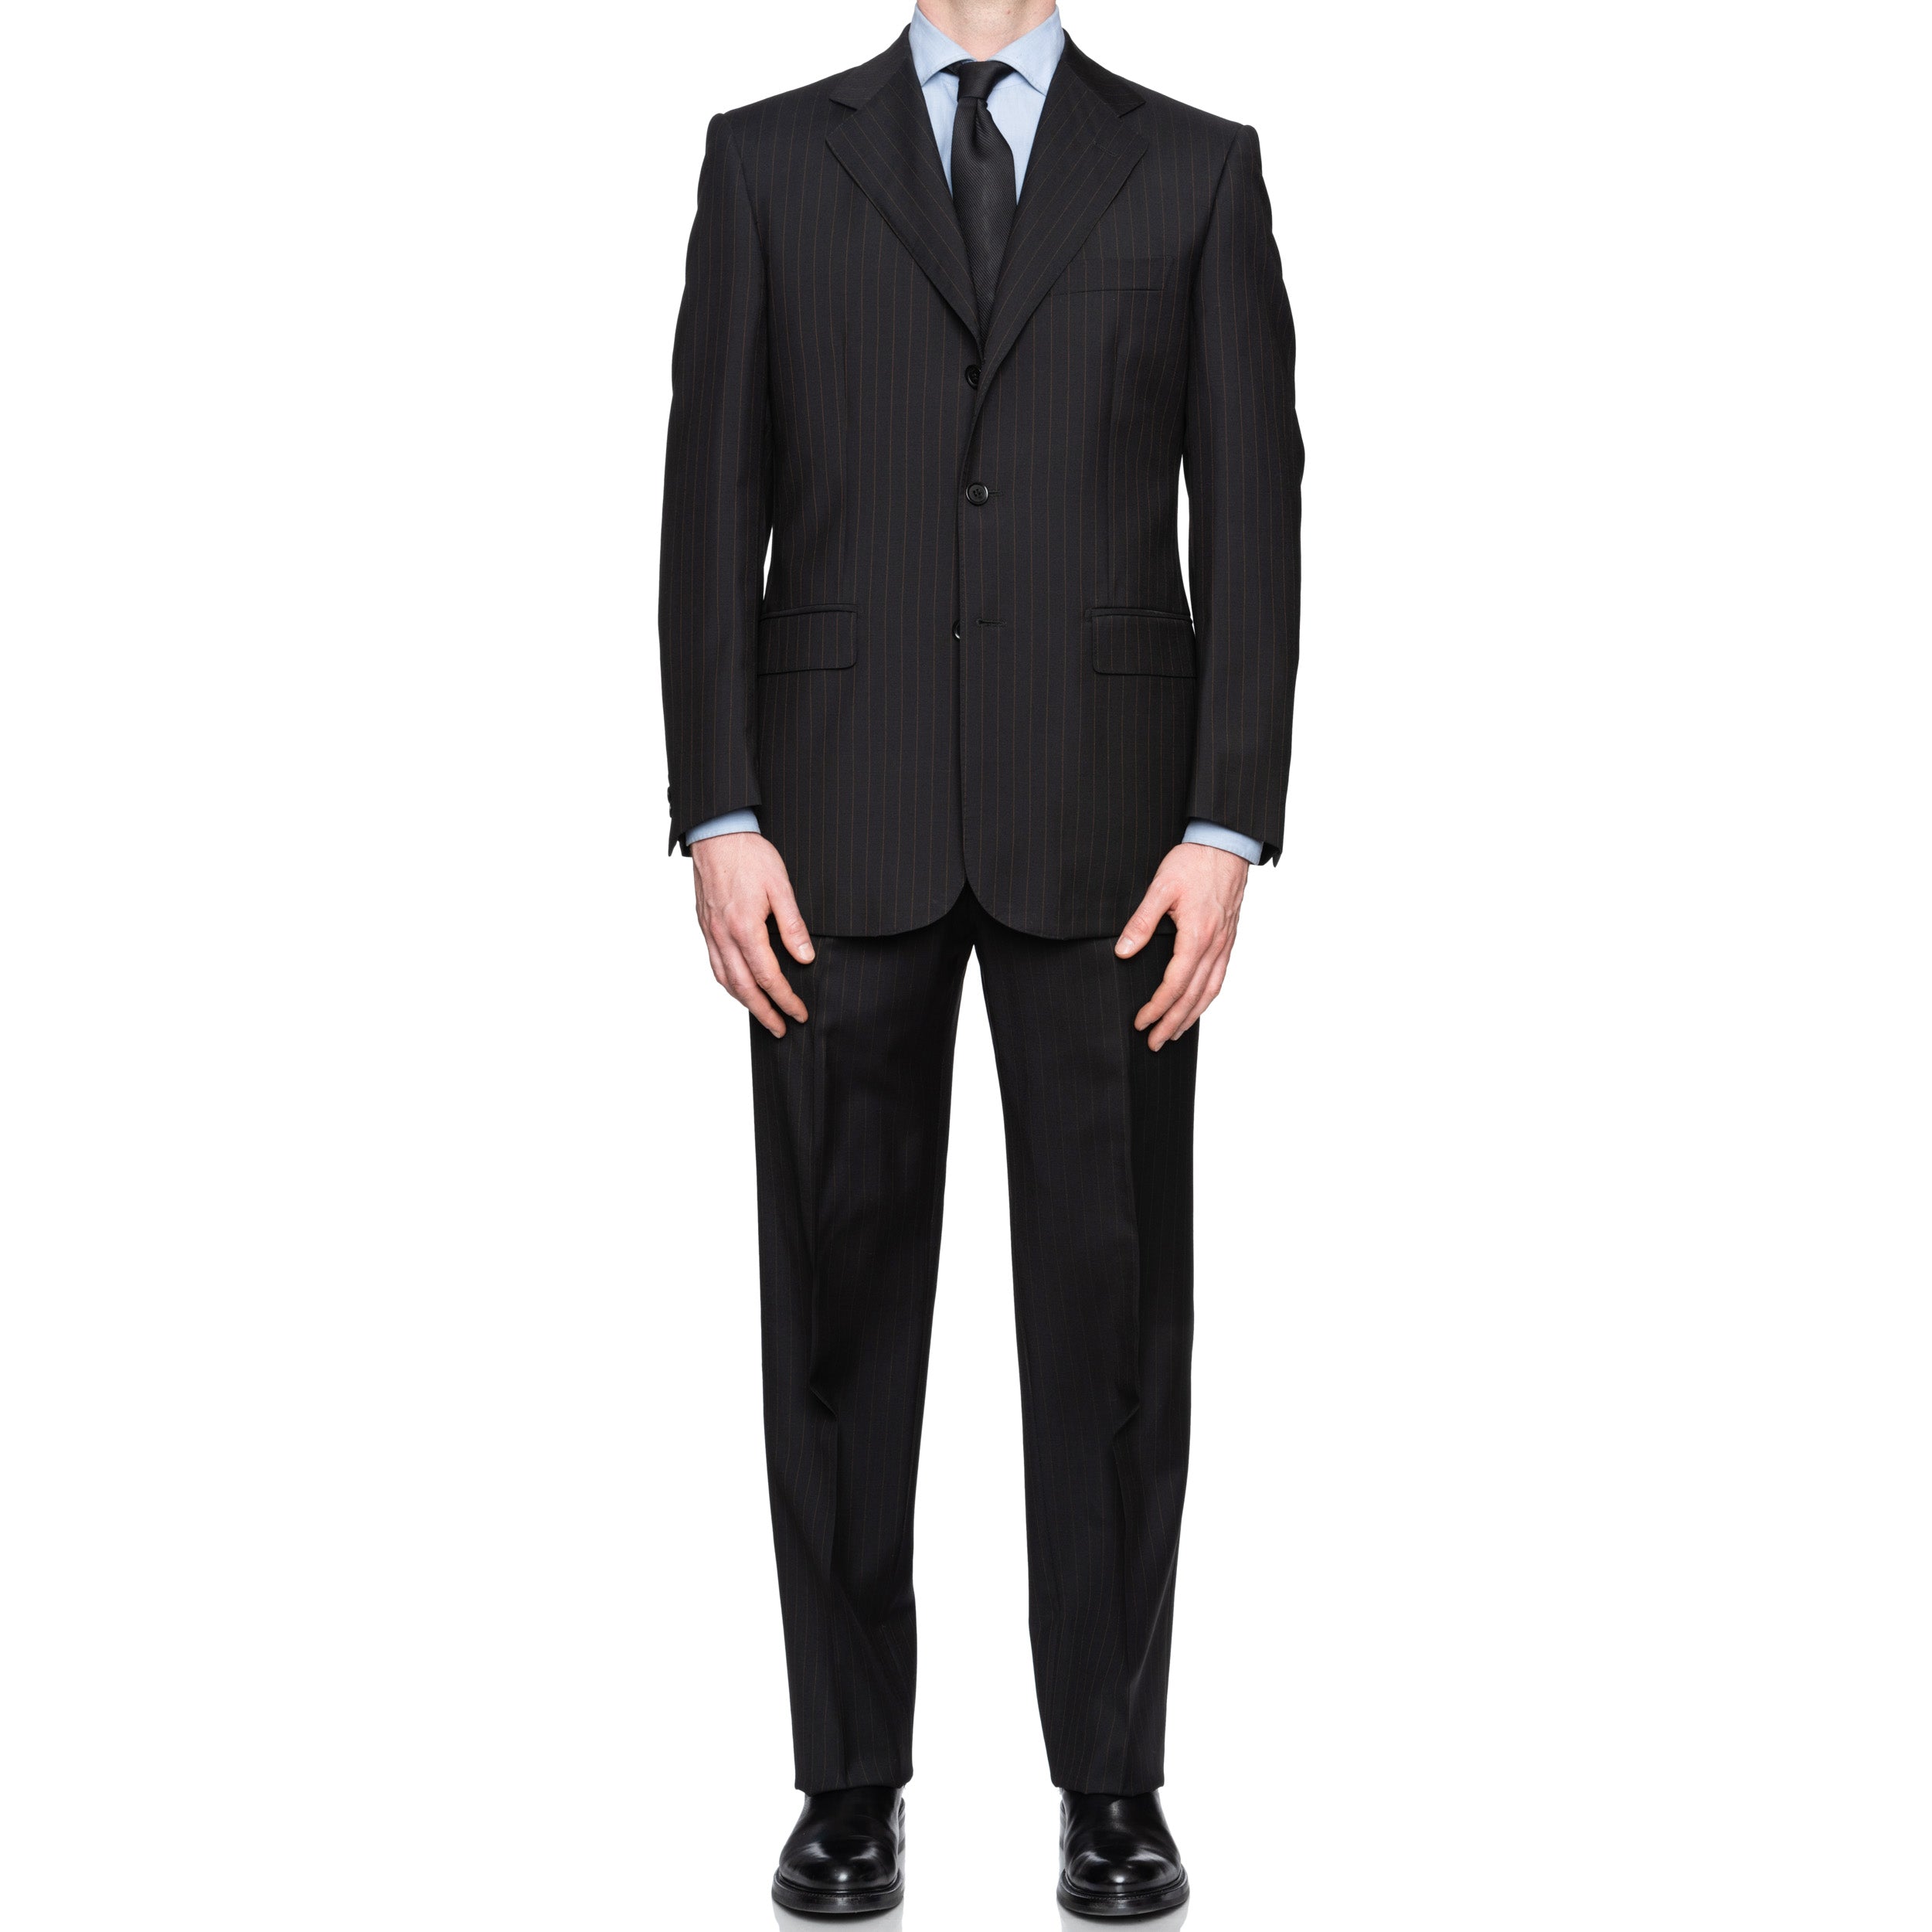 SARTORIA CASTANGIA Black Striped Wool Suit EU 50 NEW US 40 CASTANGIA